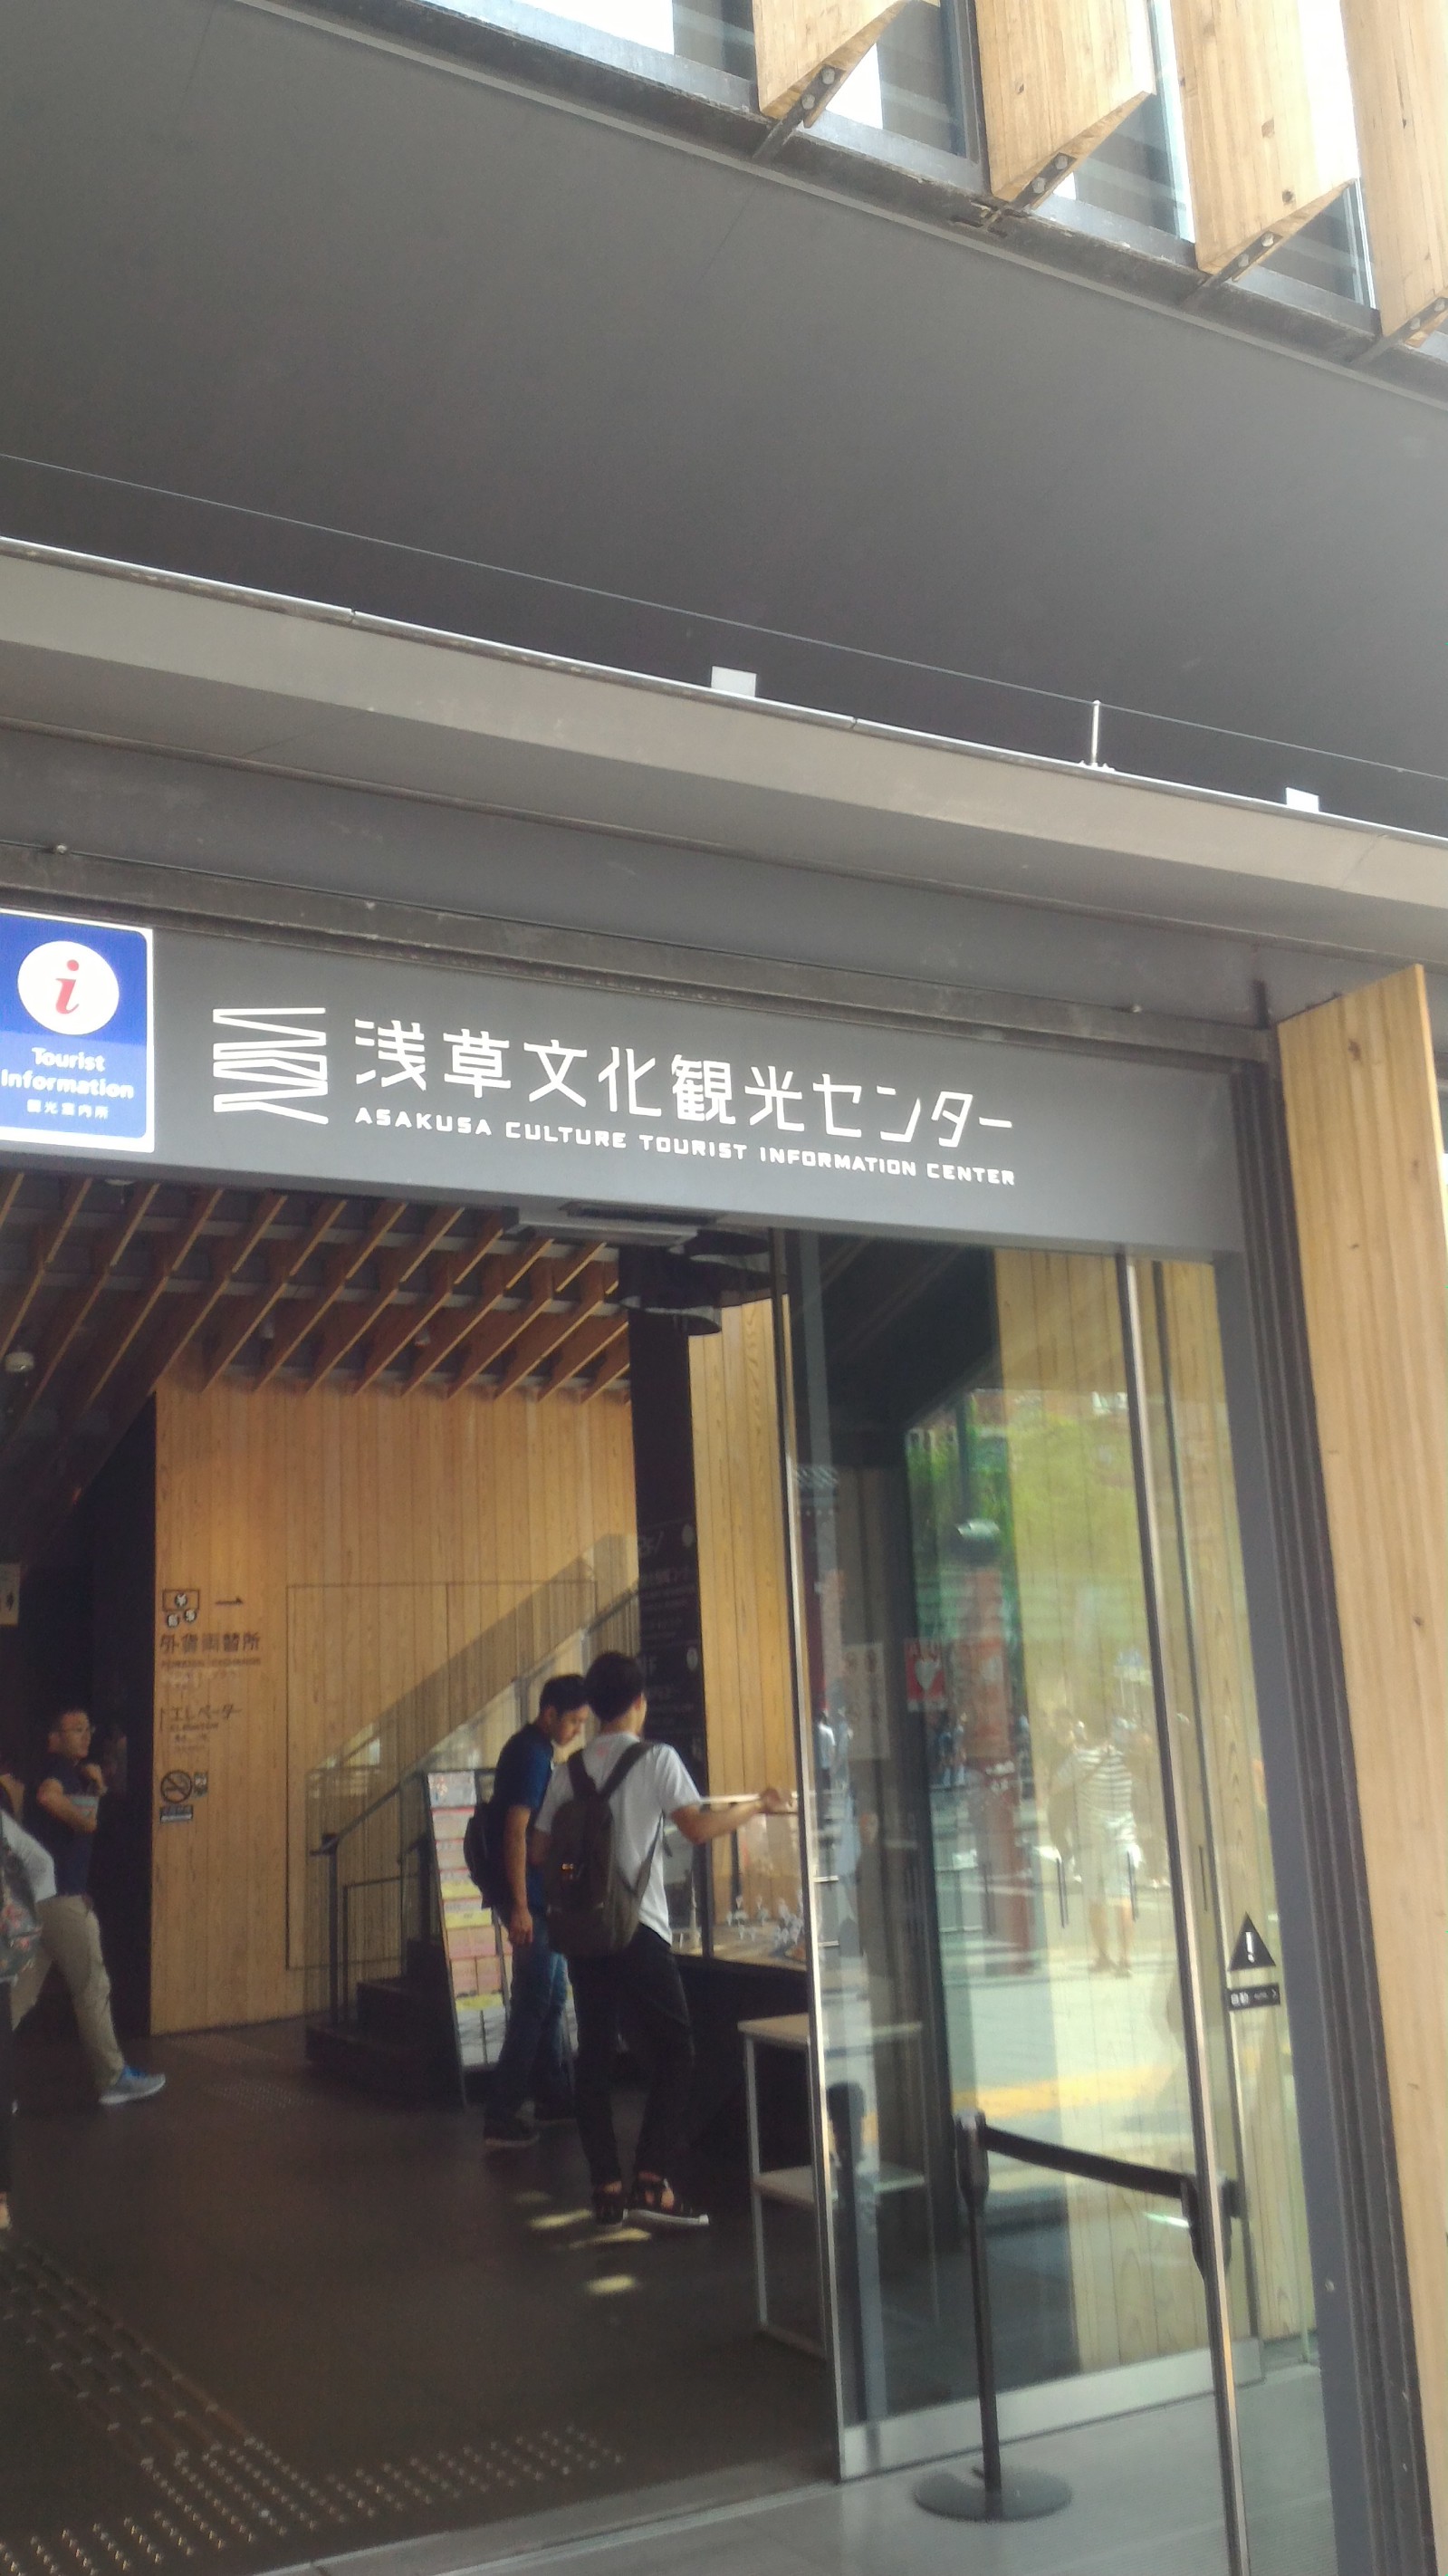 The entrance of Asakusa Information Center